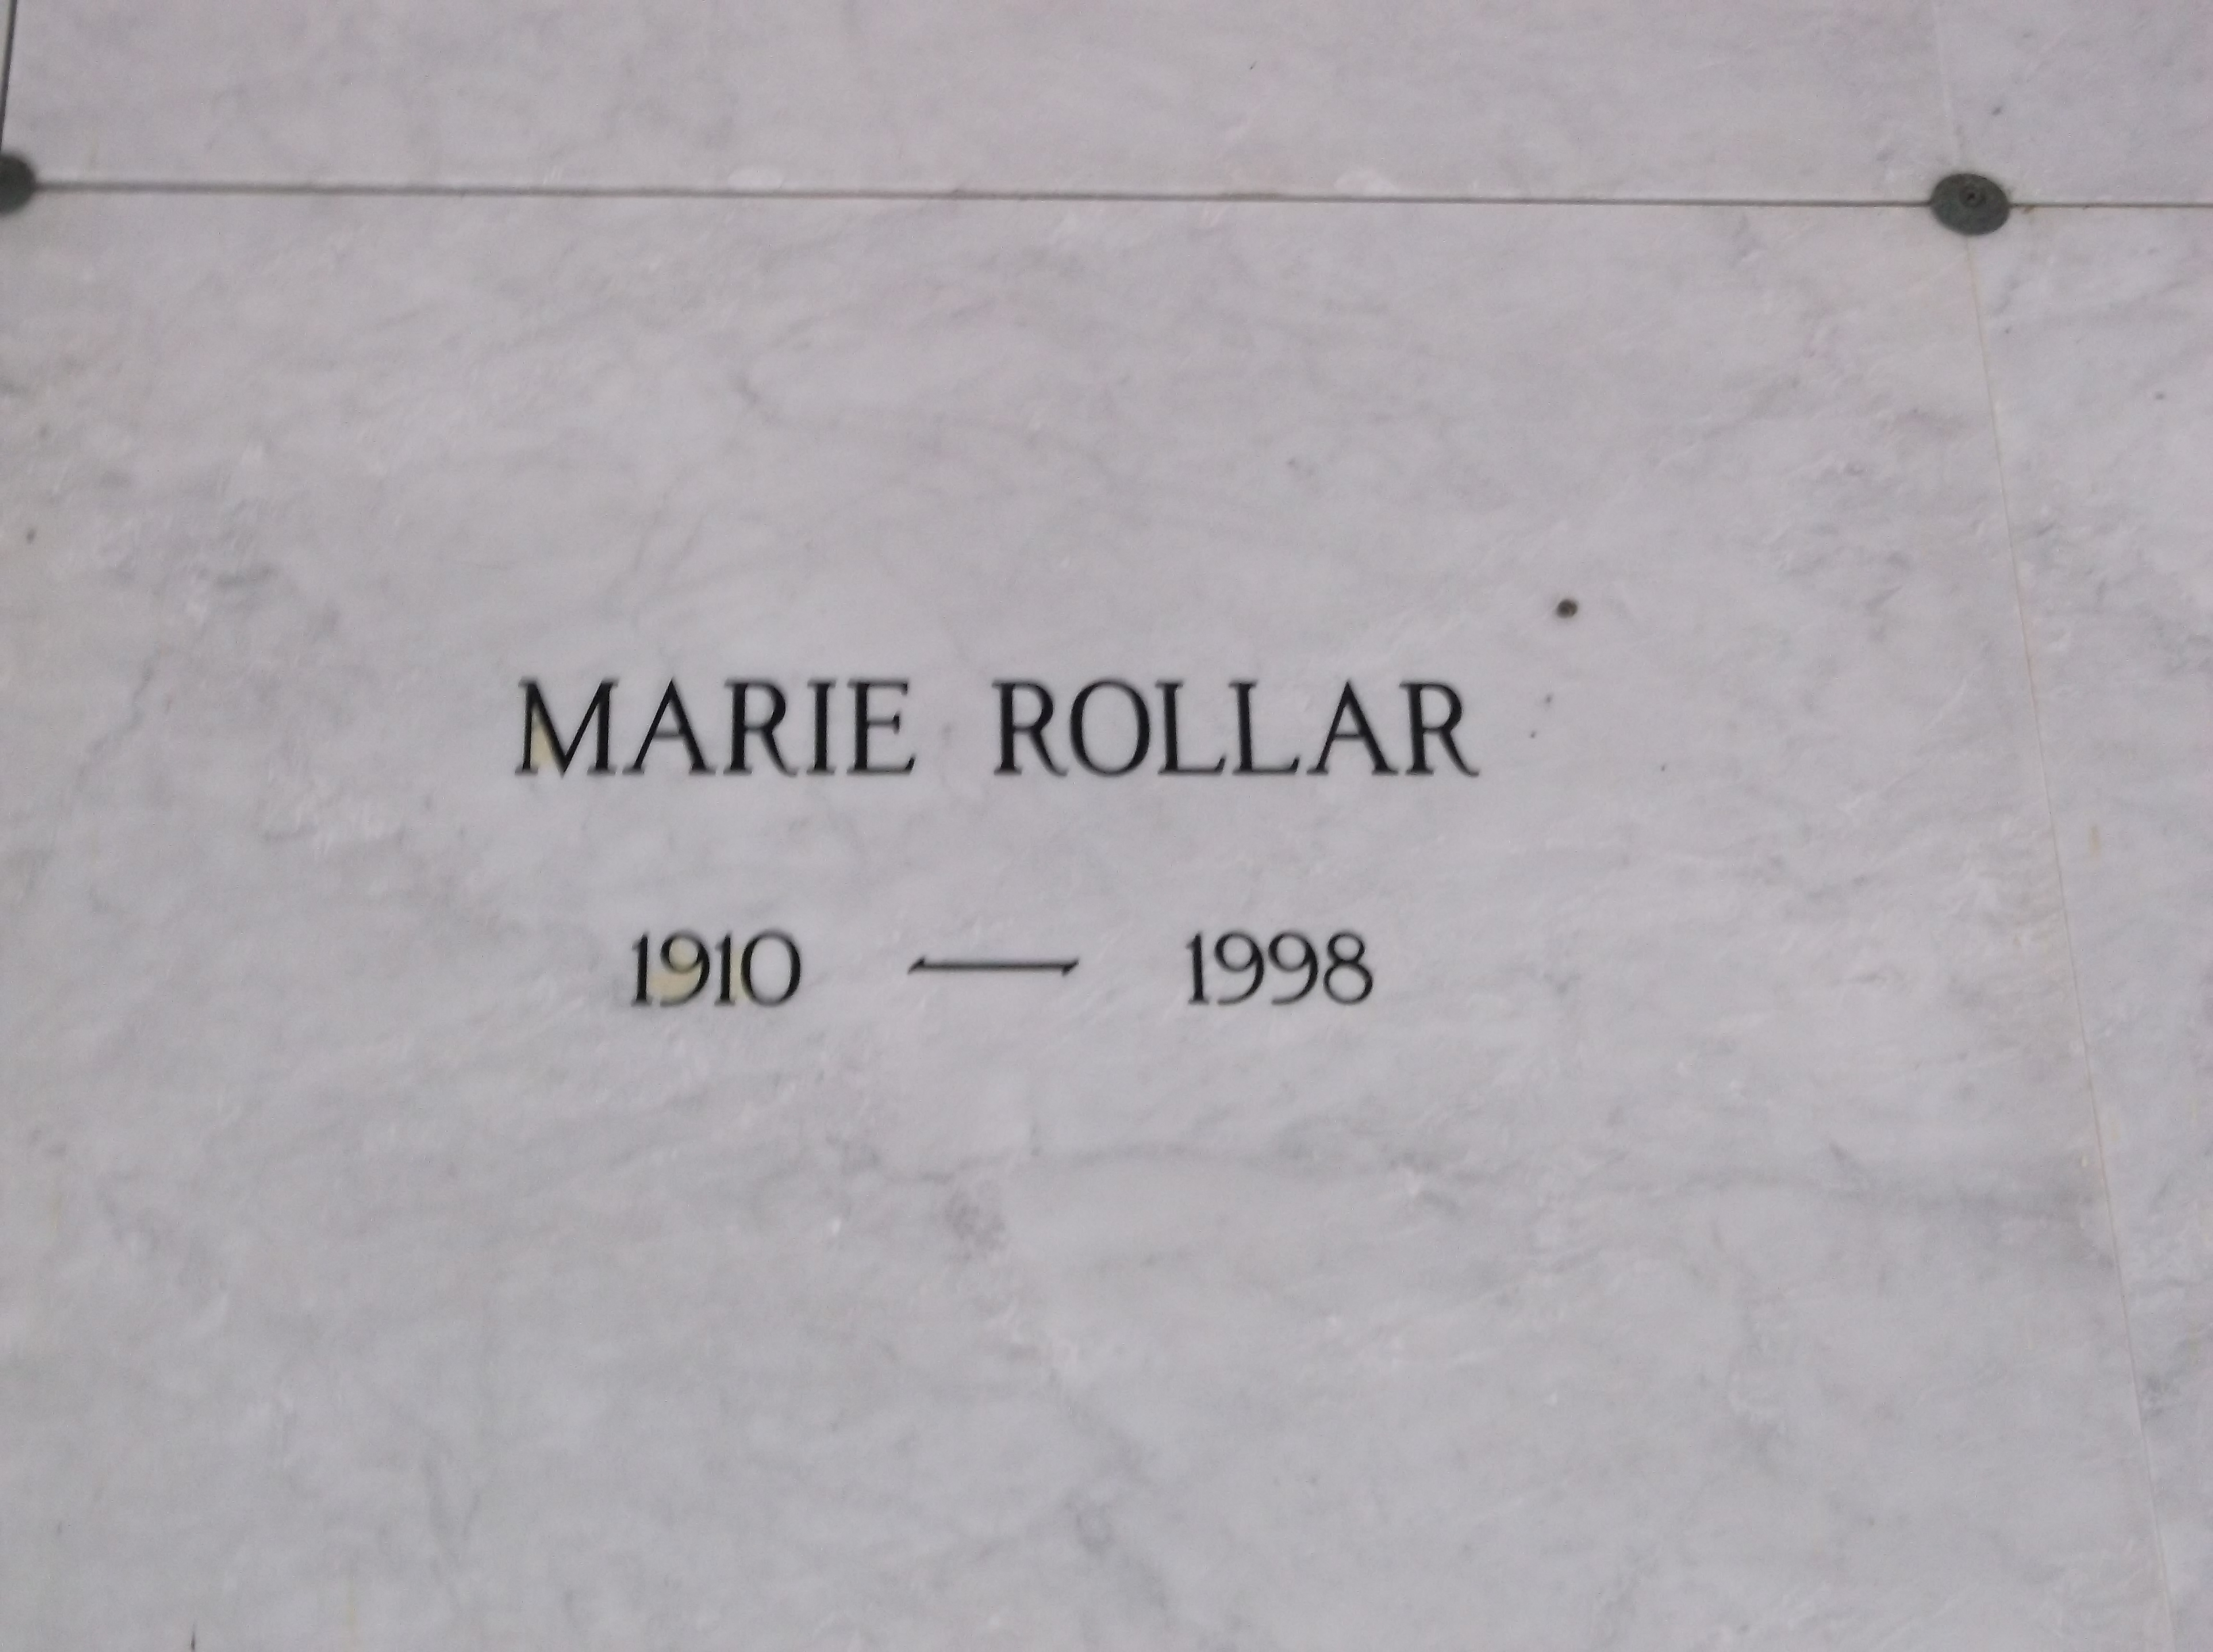 Marie Rollar